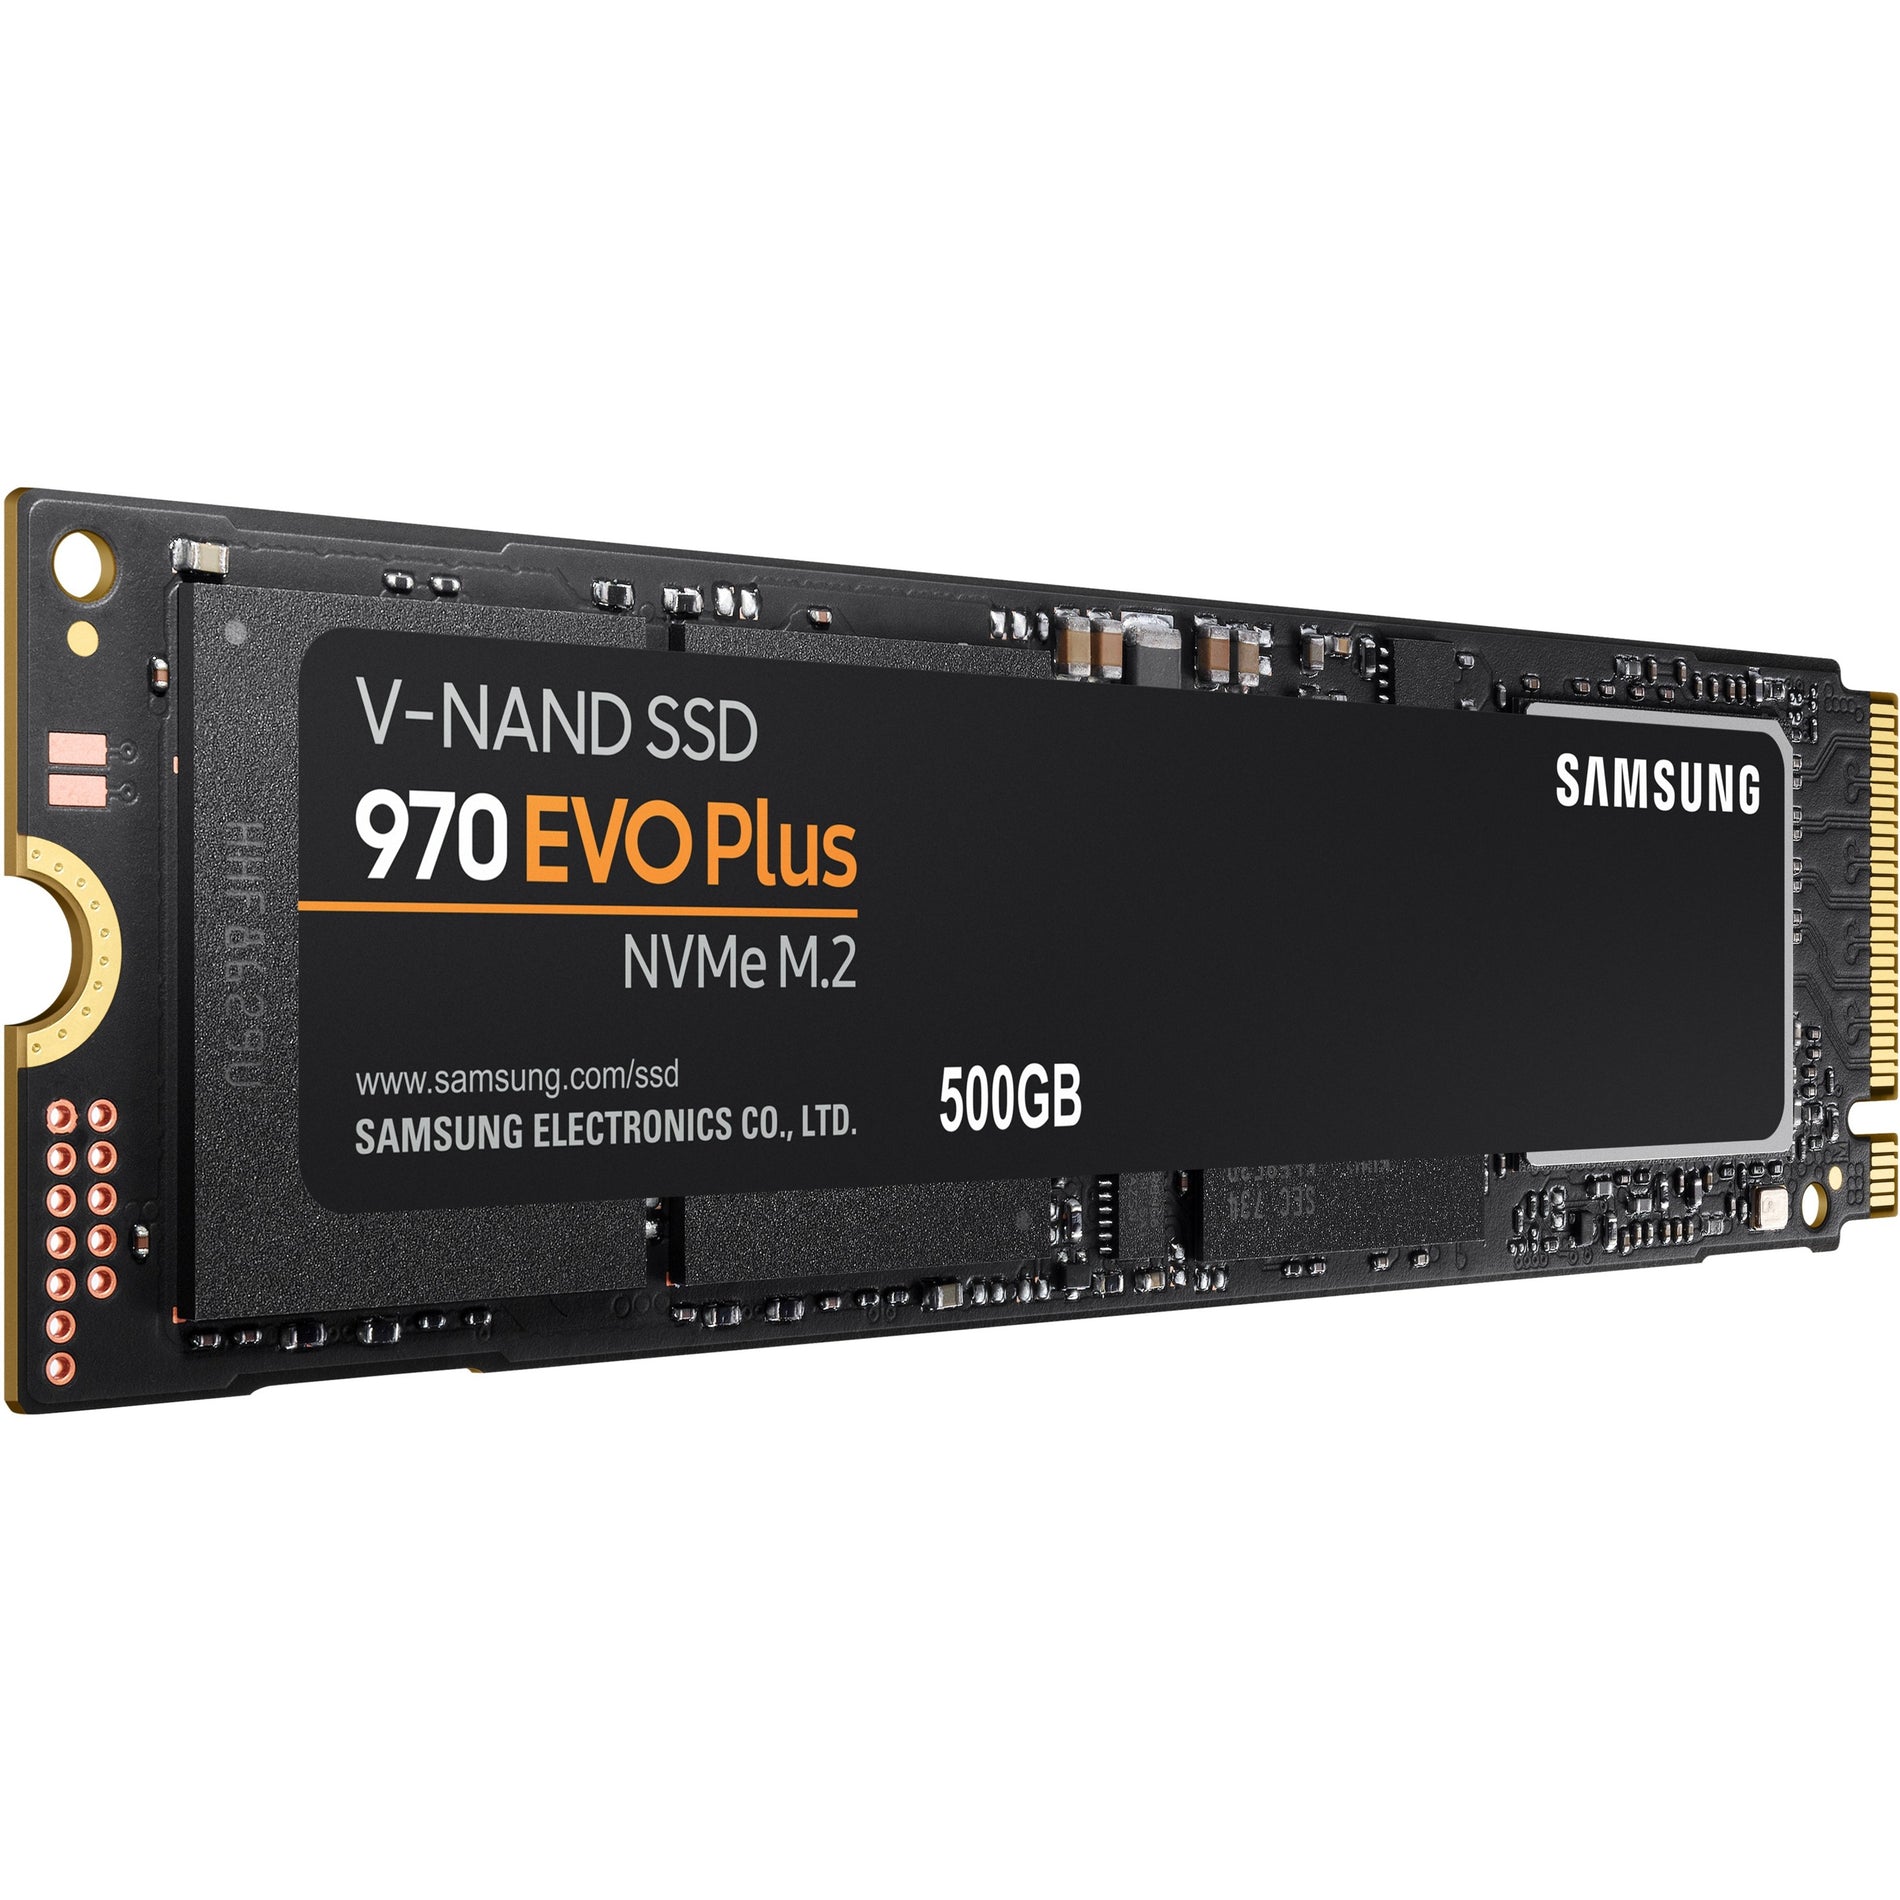 Samsung MZ-V7S500B/AM 970 EVO Plus Series 500GB PCIe NVMe M.2 Internal SSD, High-Speed Storage Solution for Notebooks and Desktop PCs